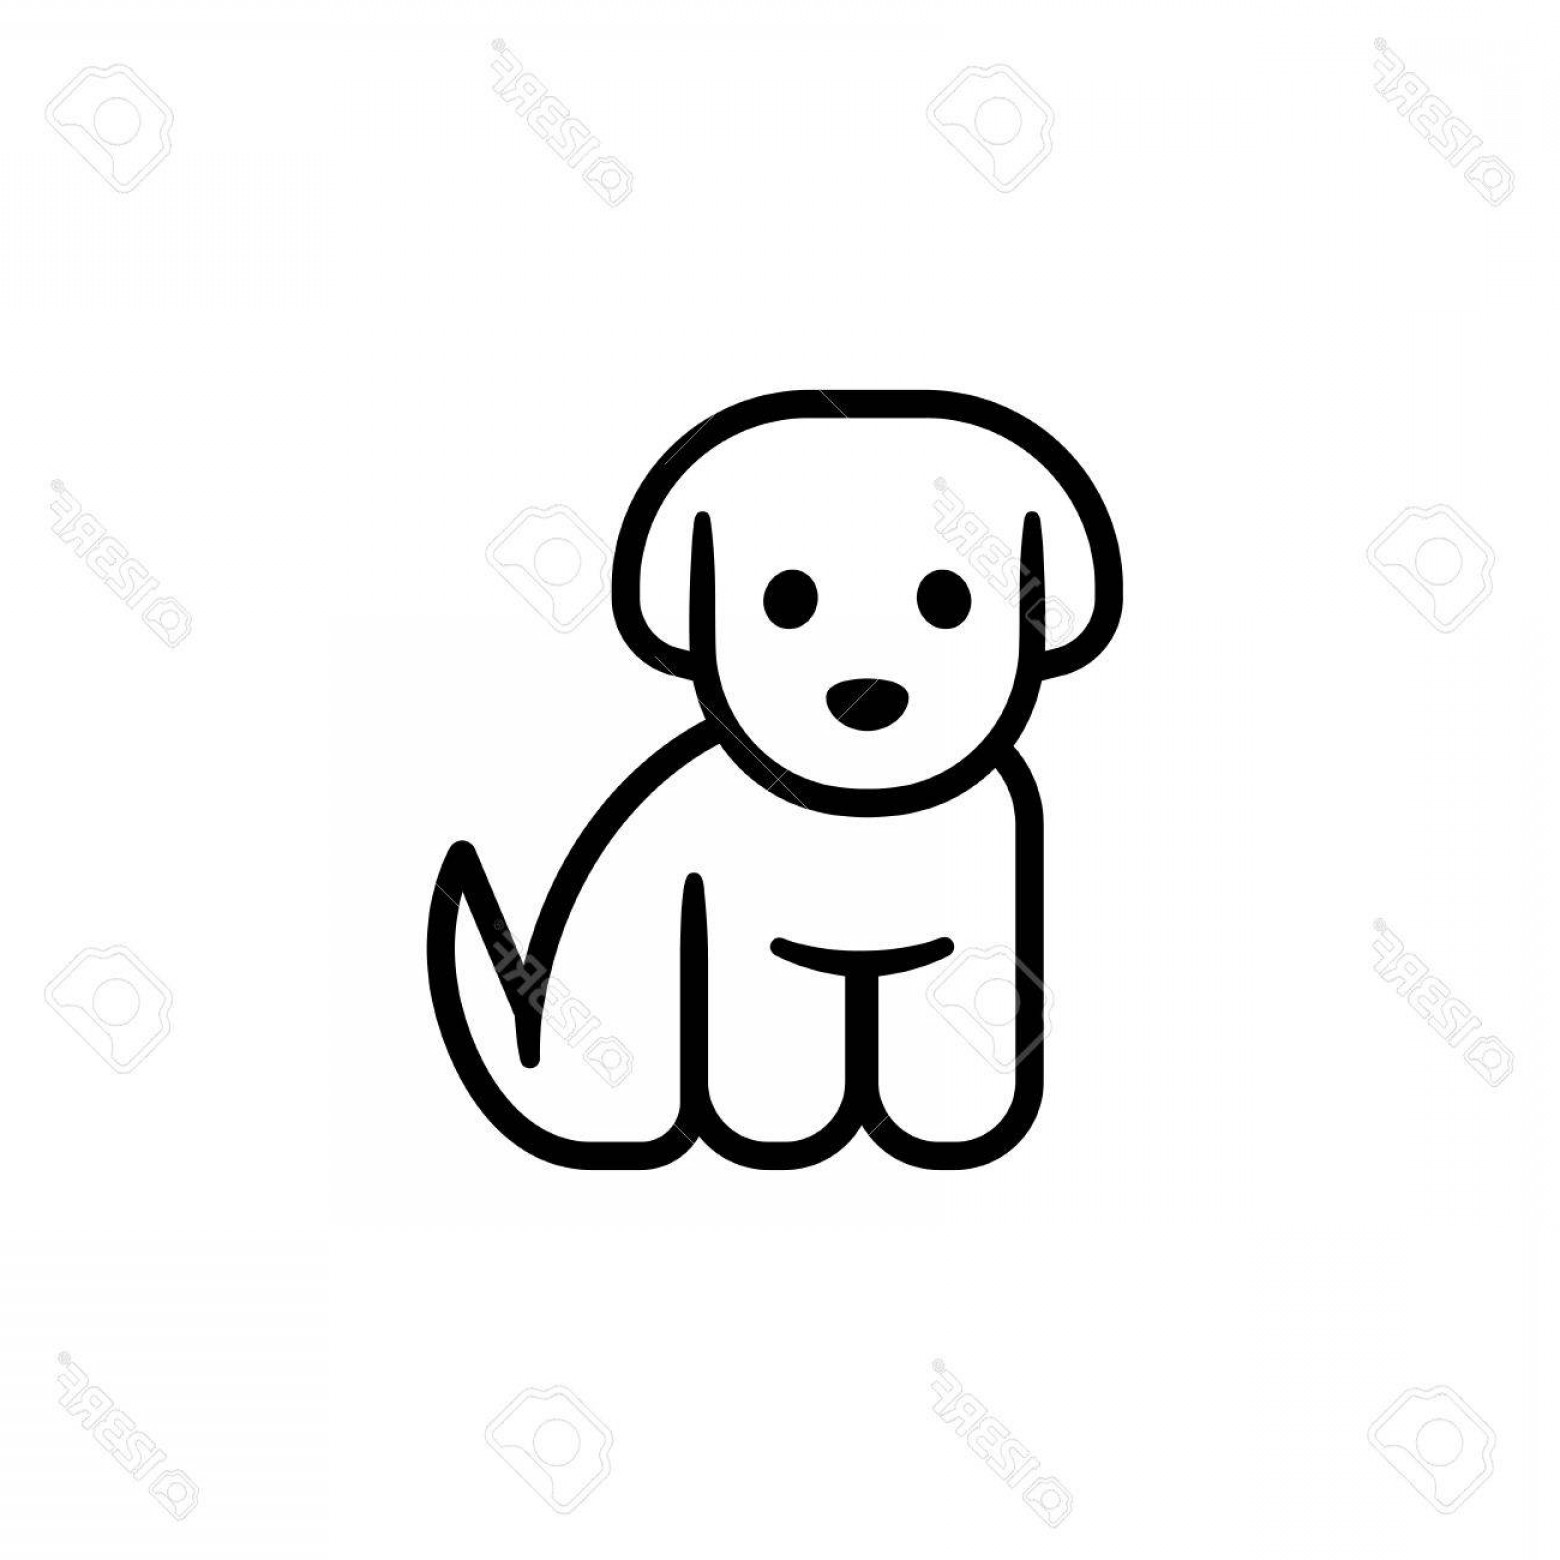 How To Draw Simple Cartoon Dog - cuteanimals